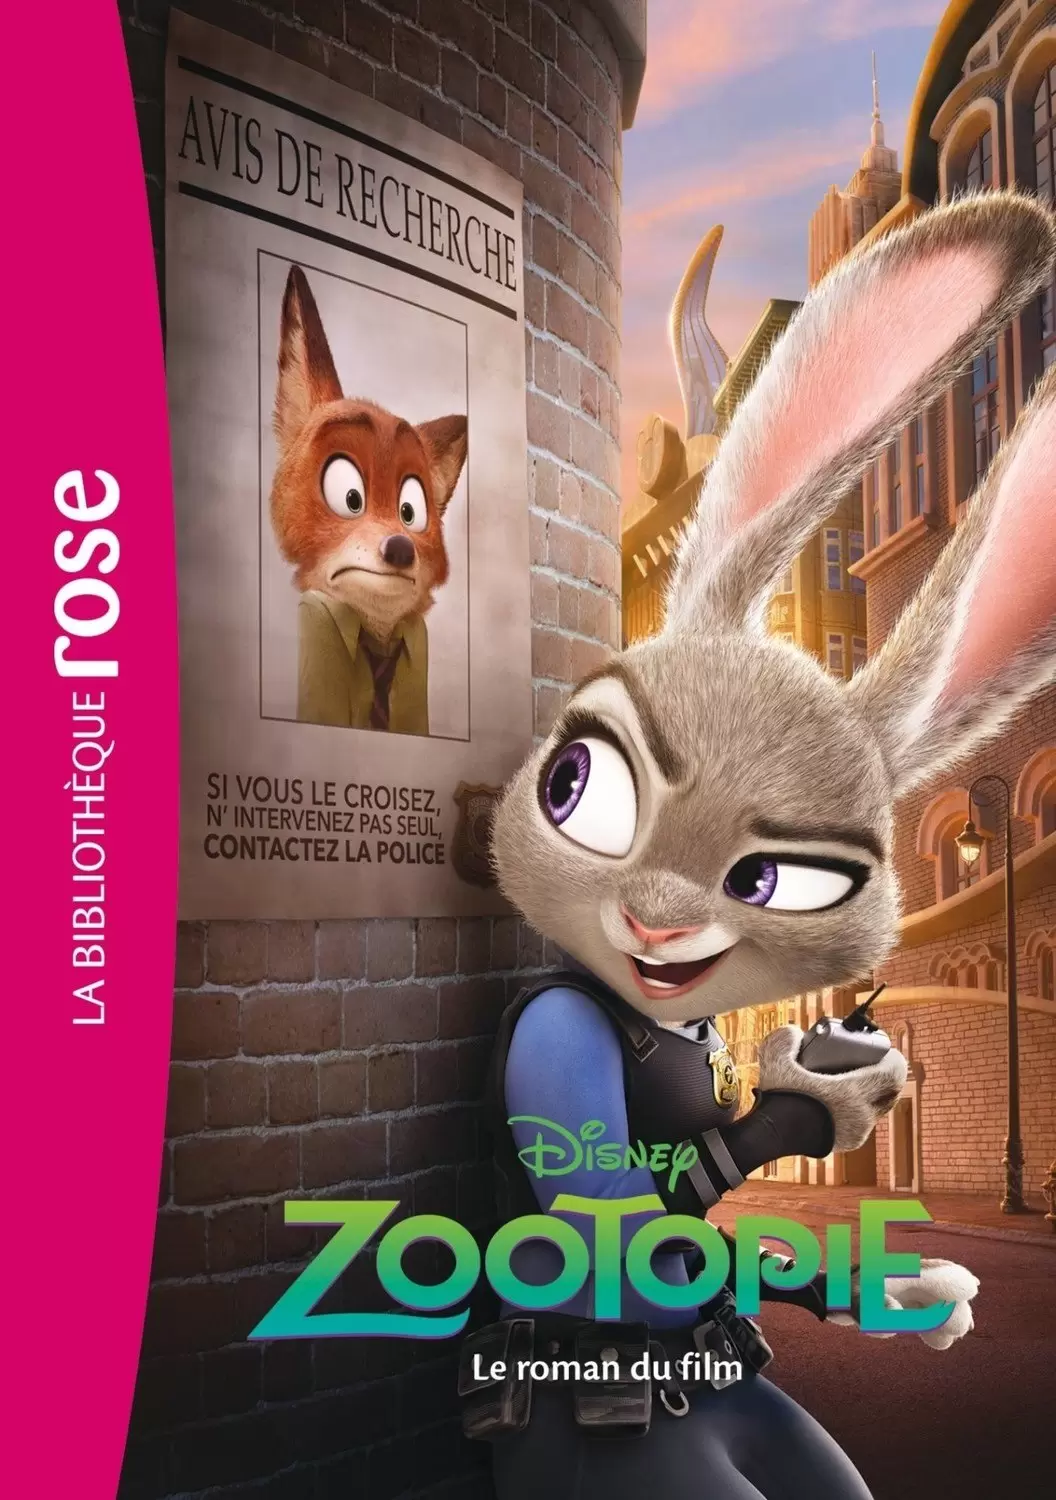 Disney - Zootopie : Le roman du film